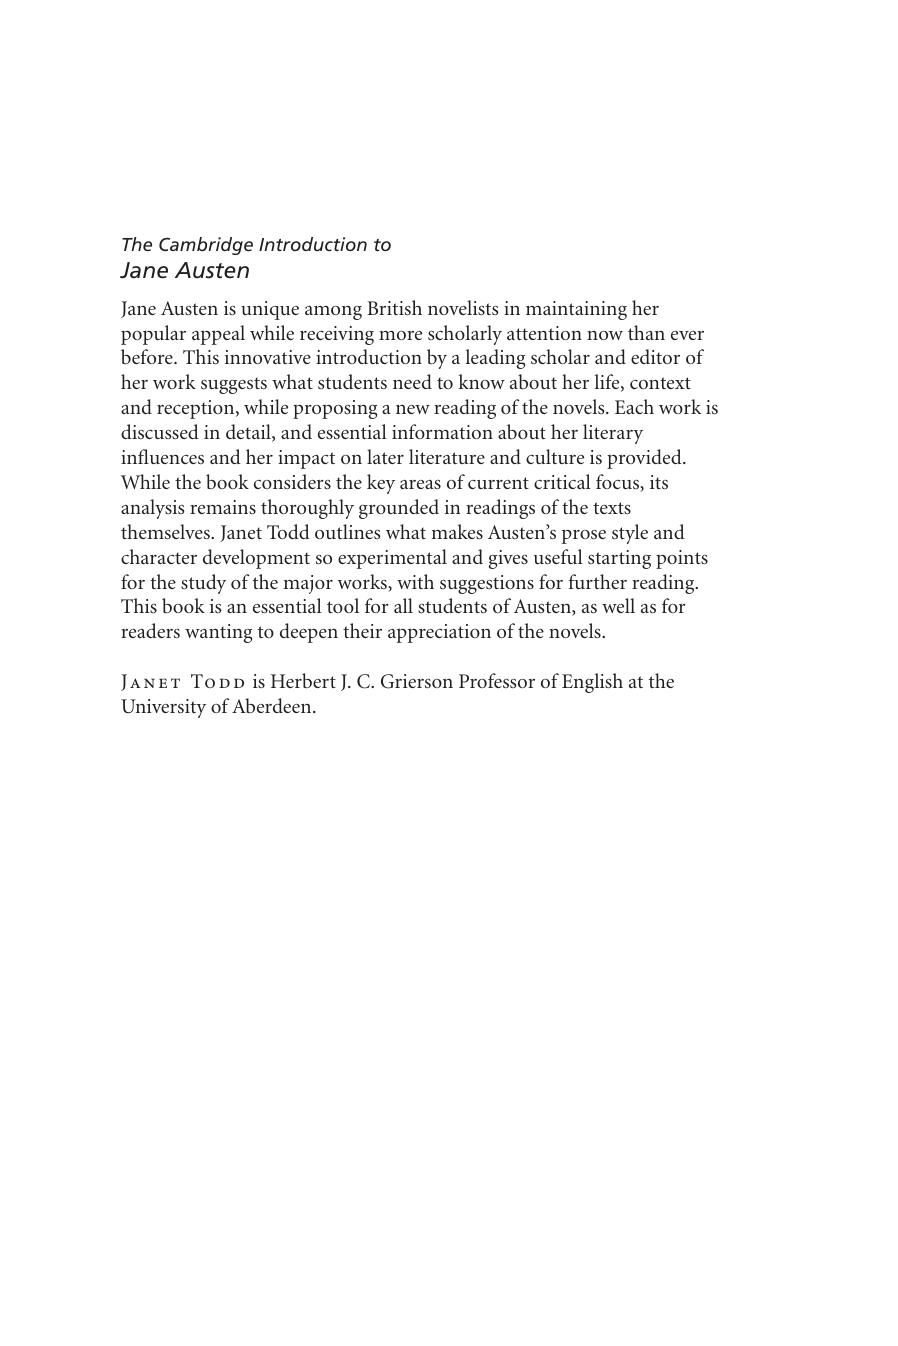 The Cambridge Introduction to Jane Austen (Cambridge Introductions to Literature) by Janet Todd